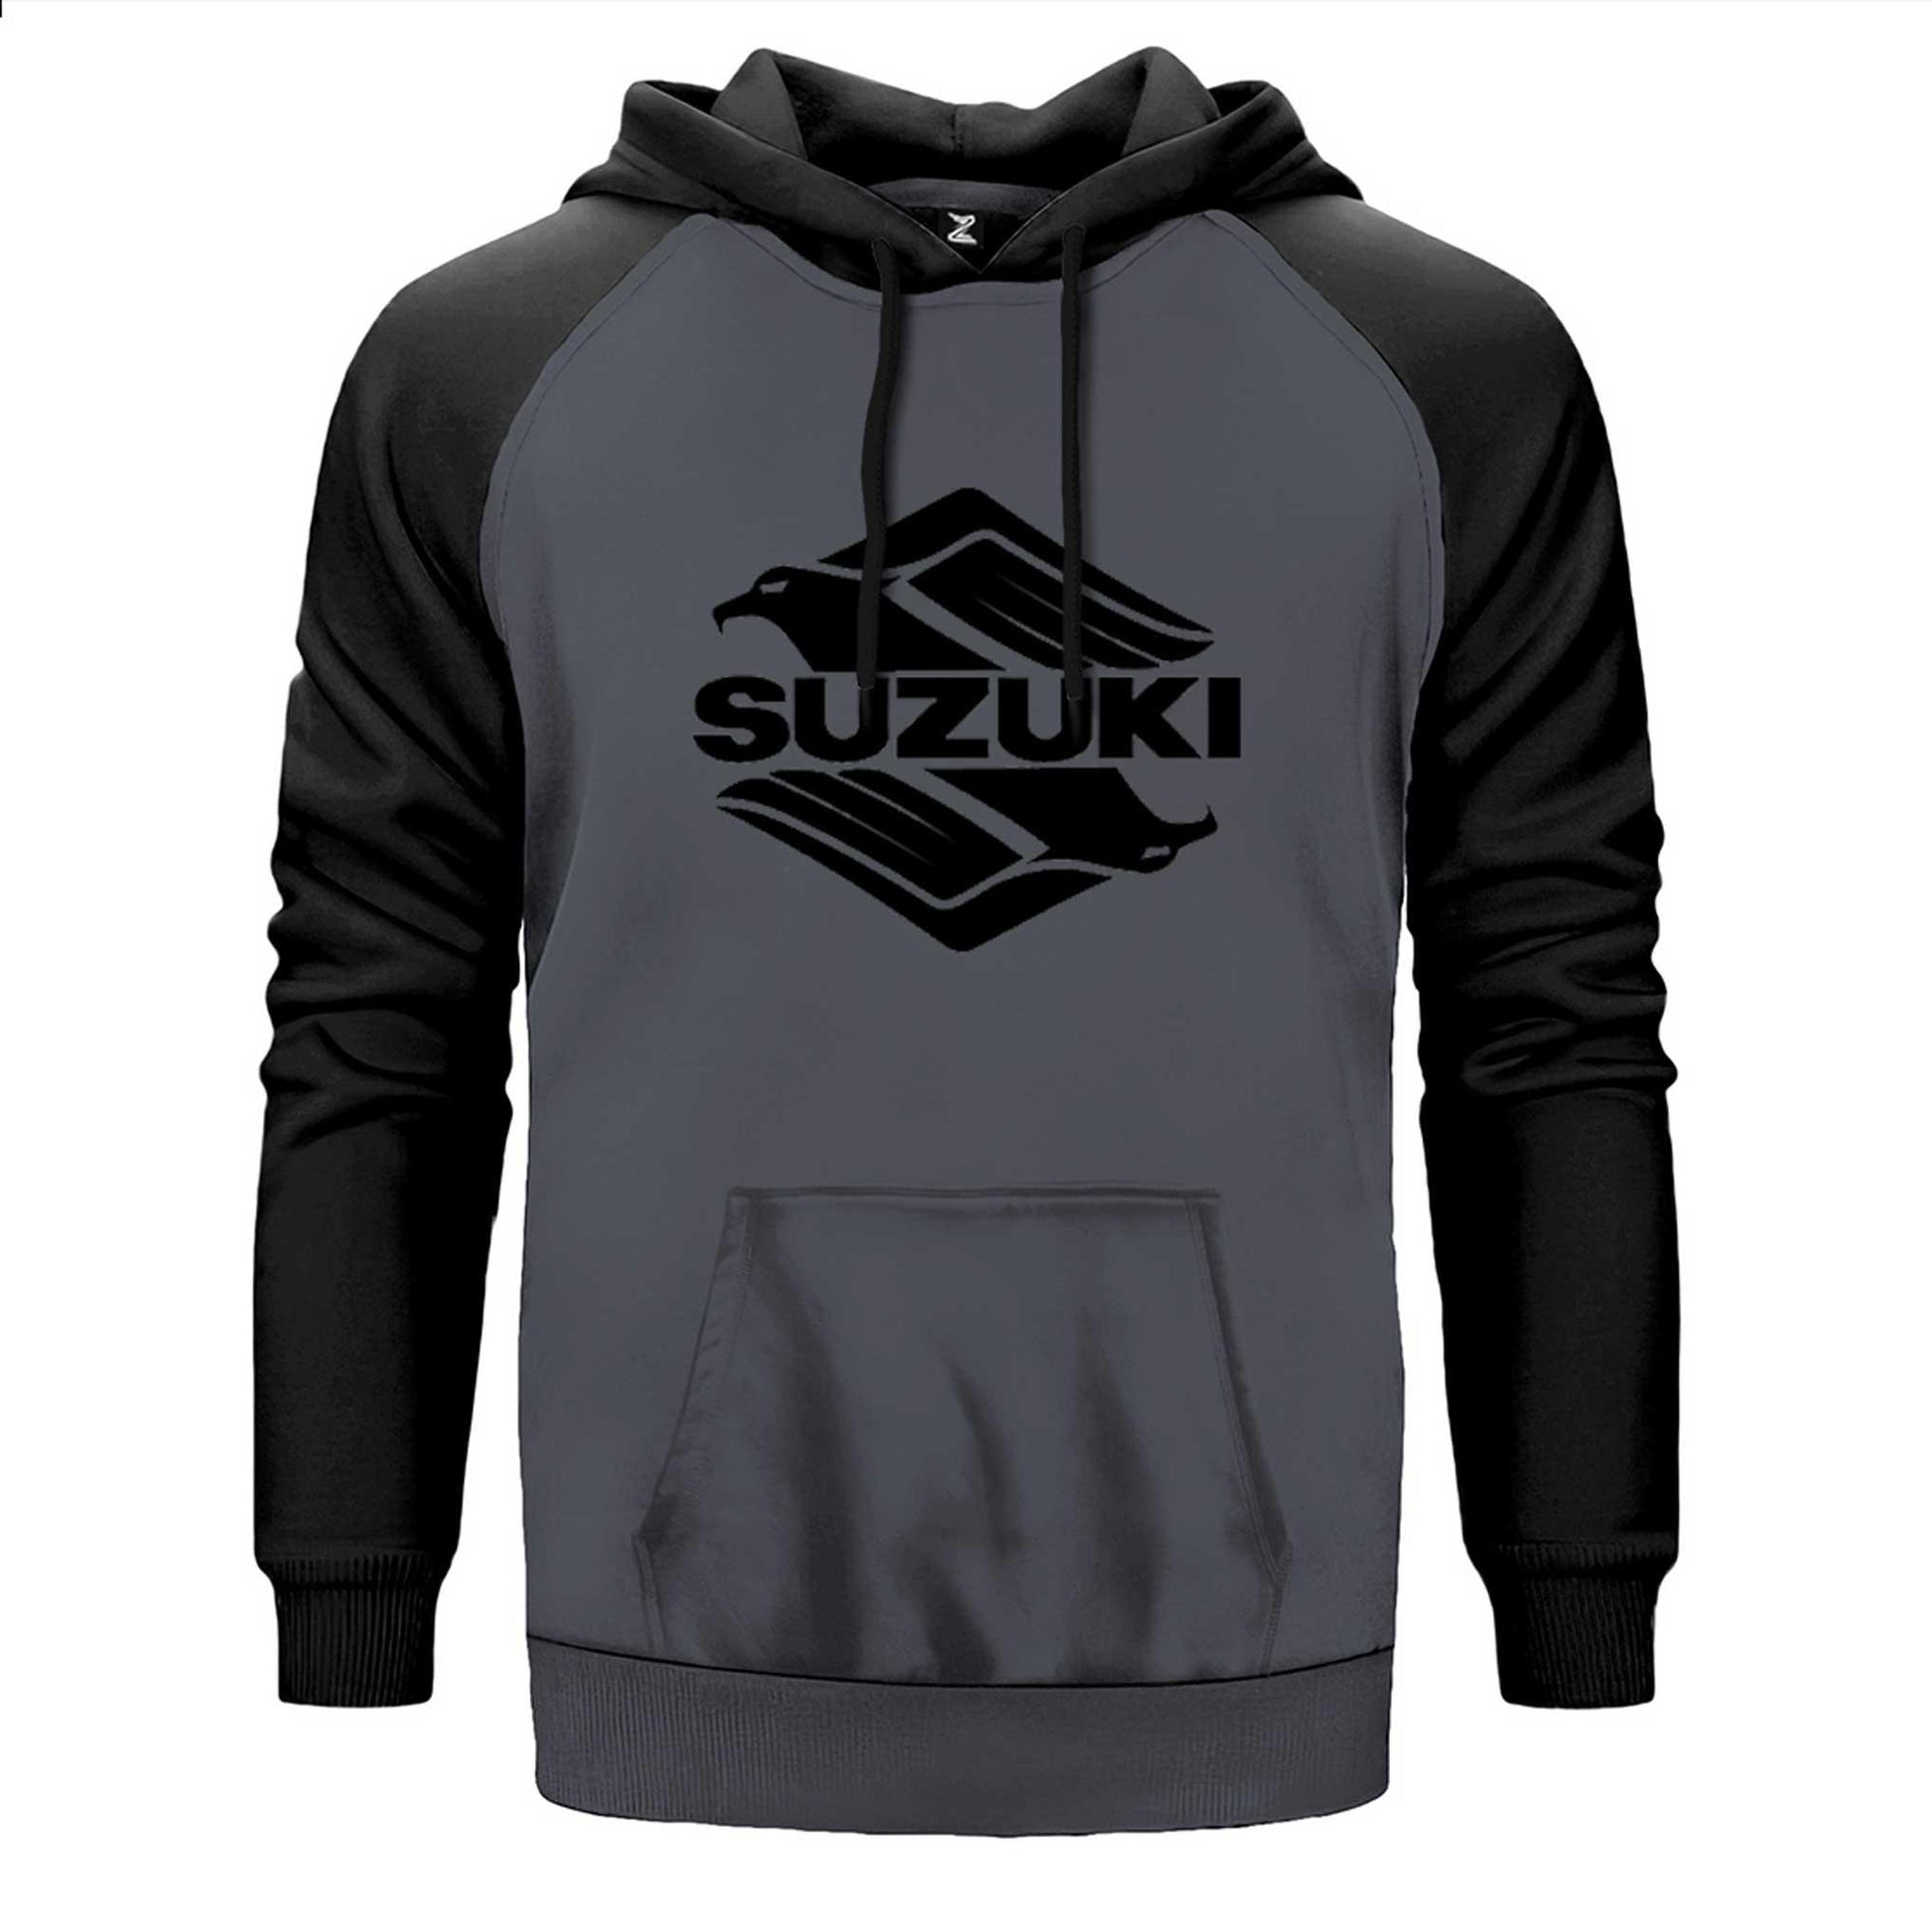 Suzuki Intruder Çift Renk Reglan Kol Sweatshirt - Zepplingiyim